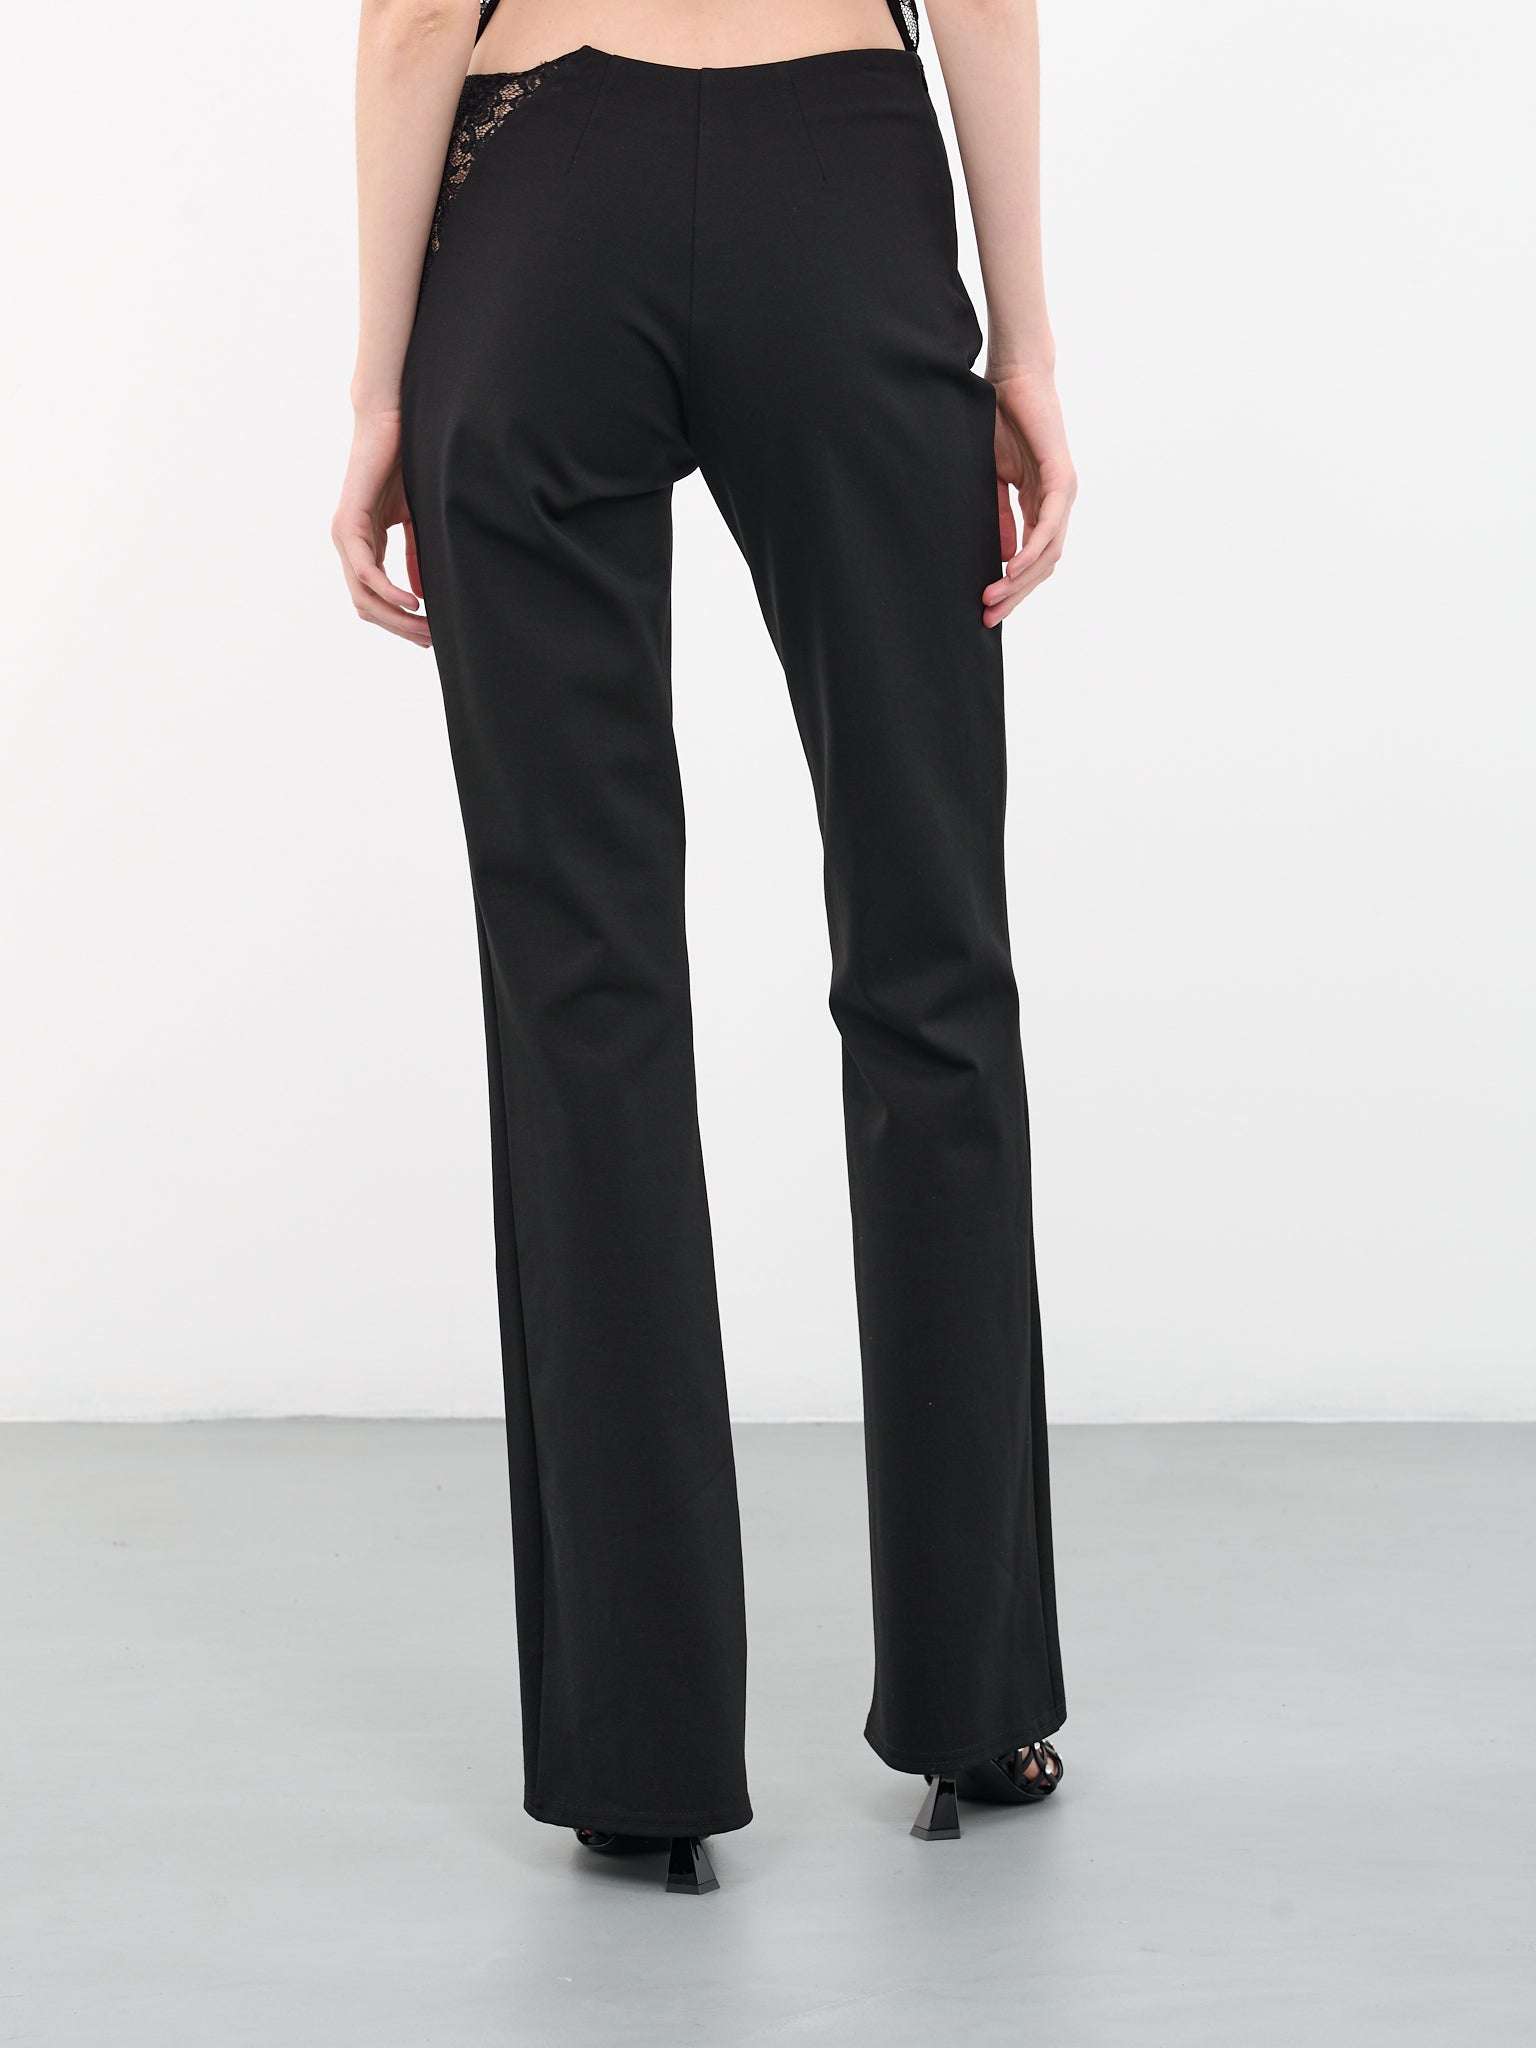 Lace Trousers (LG005-BLACK)